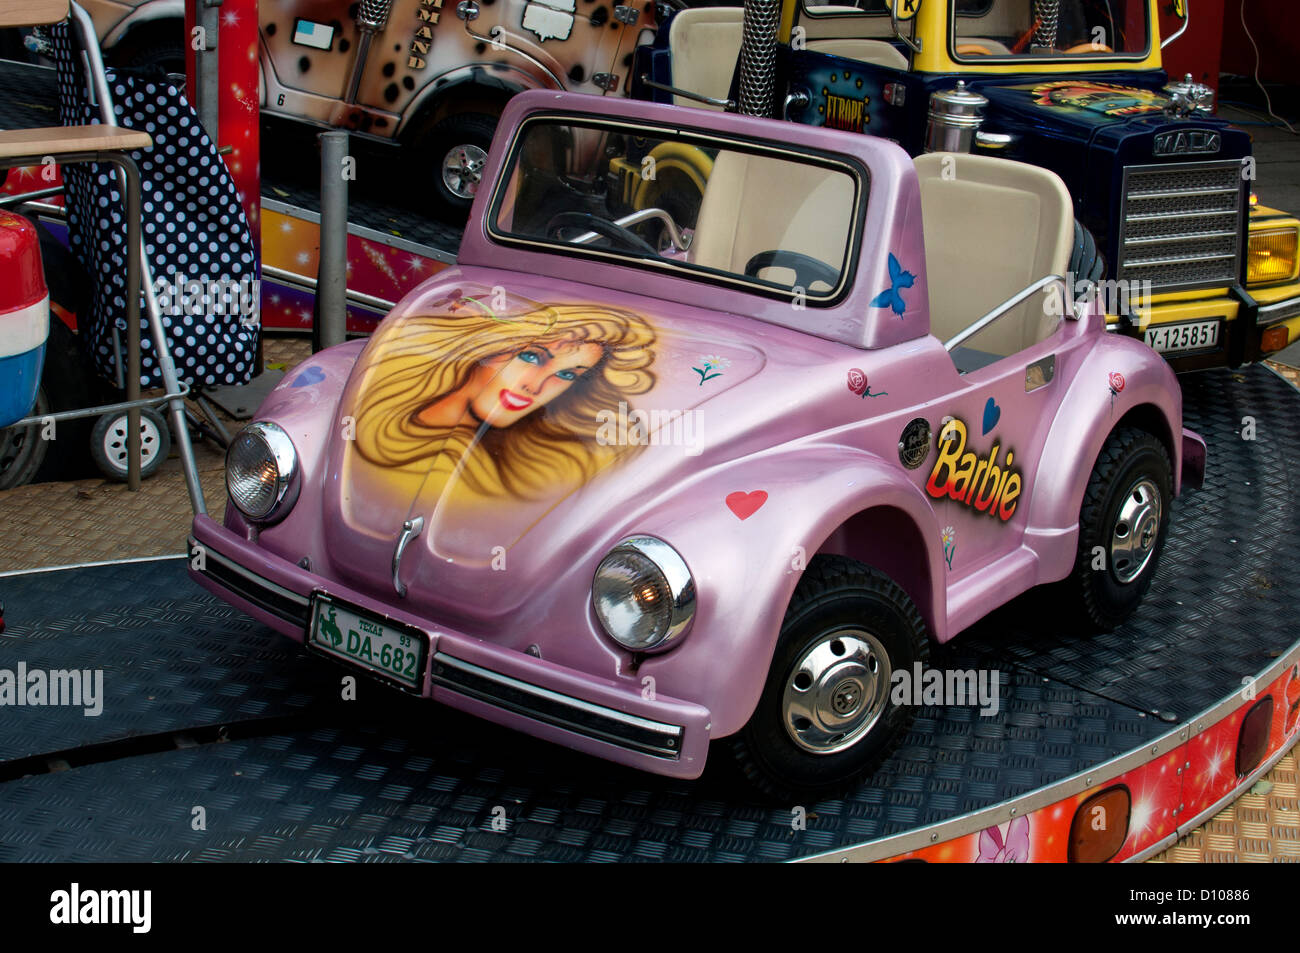 Rp fair ride, Beetle Fotografía de stock - Alamy